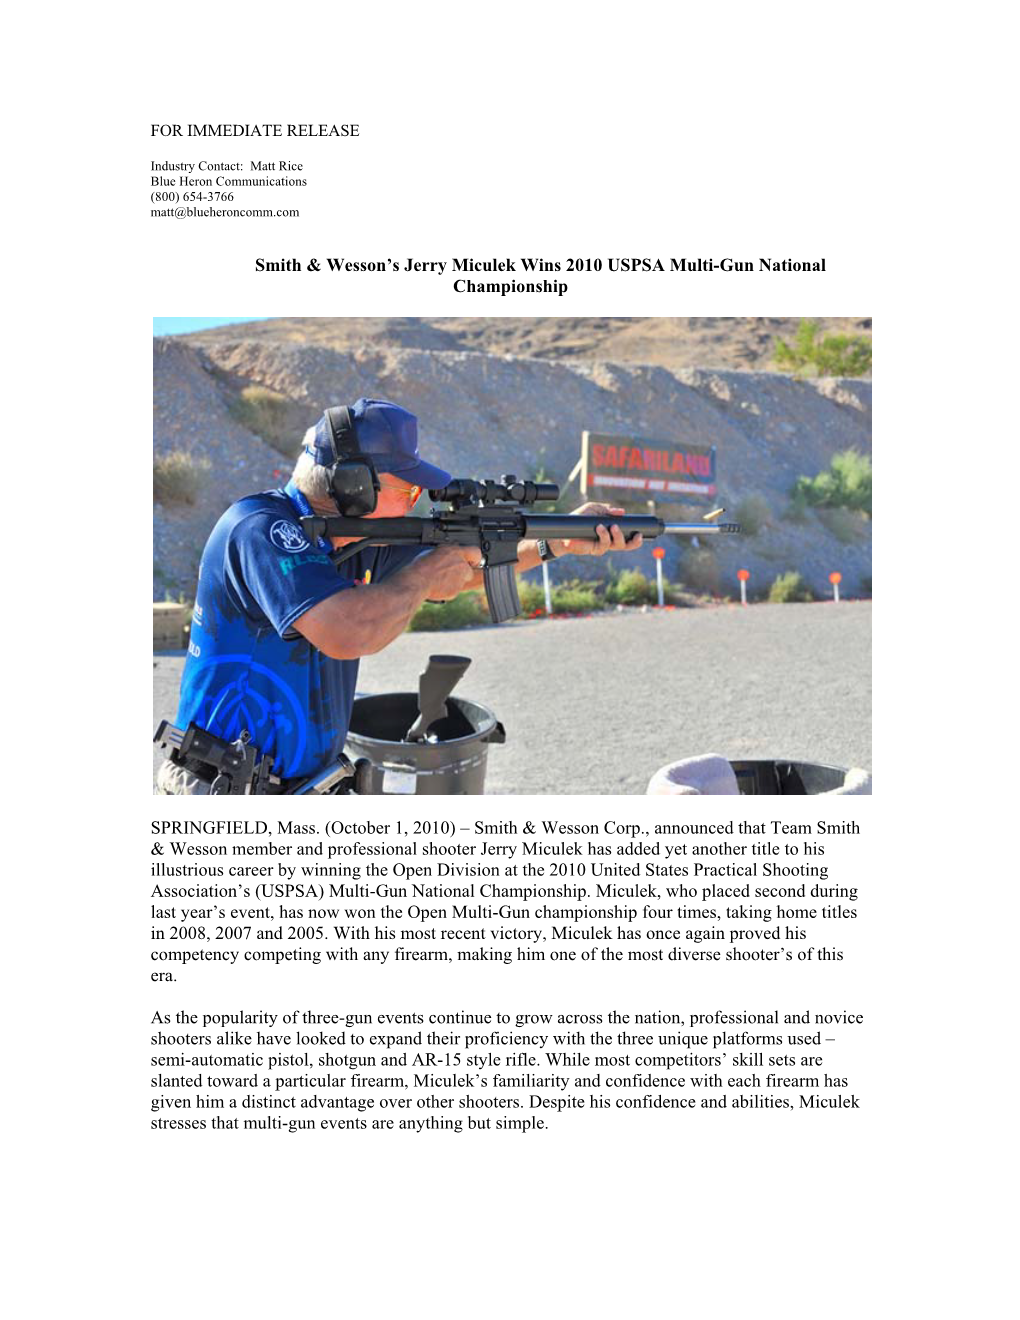 Smith & Wesson's Jerry Miculek Wins 2010 USPSA Multi-Gun National